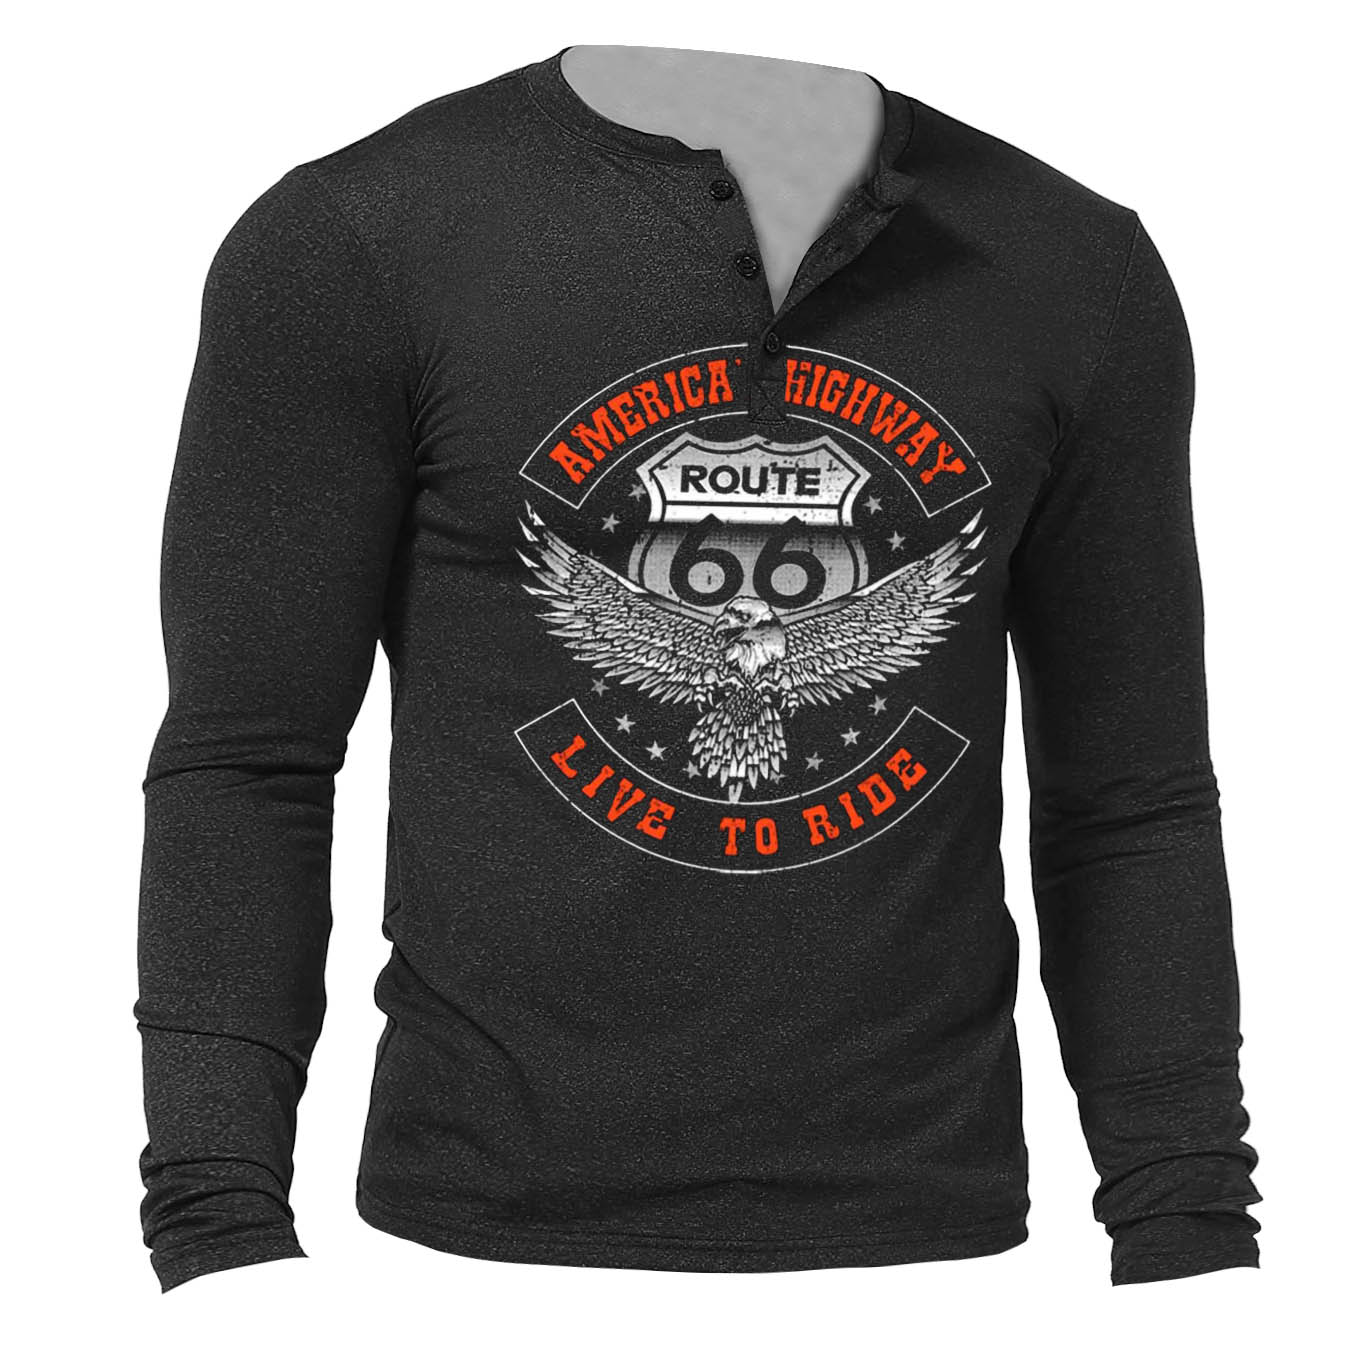 Men's Outdoor America's Highway Chic Route 66 Henley T-shirt